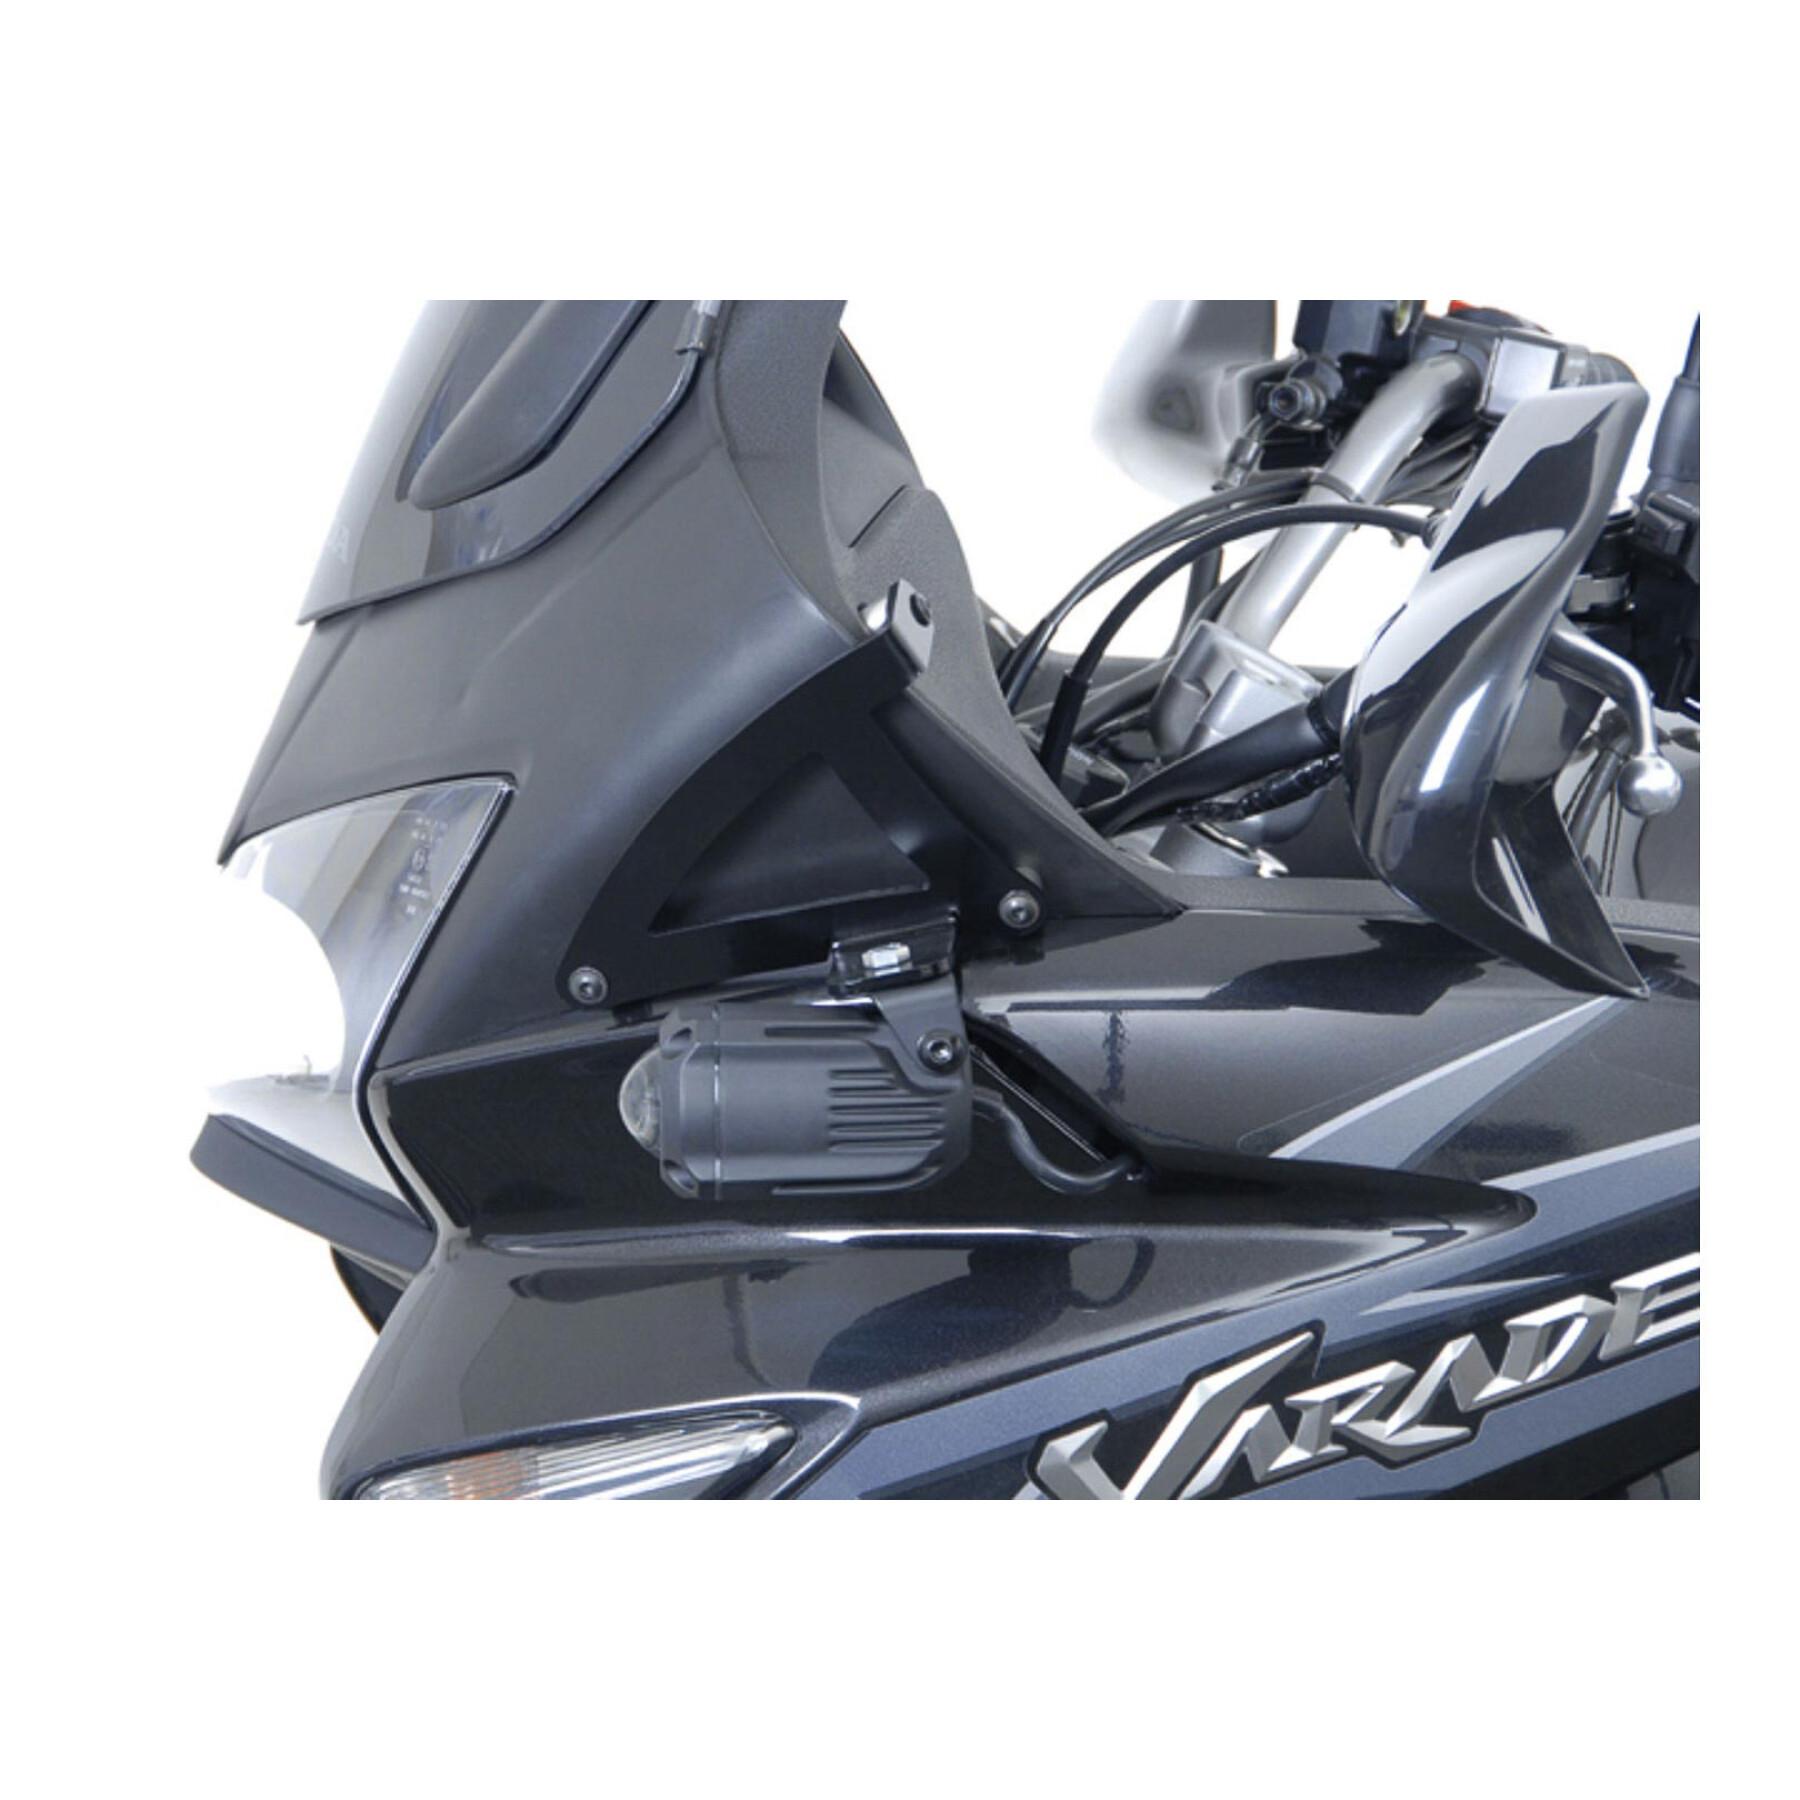 Extra motorfiets led licht Sw-Motech Xl1000v Varadero (01-11)